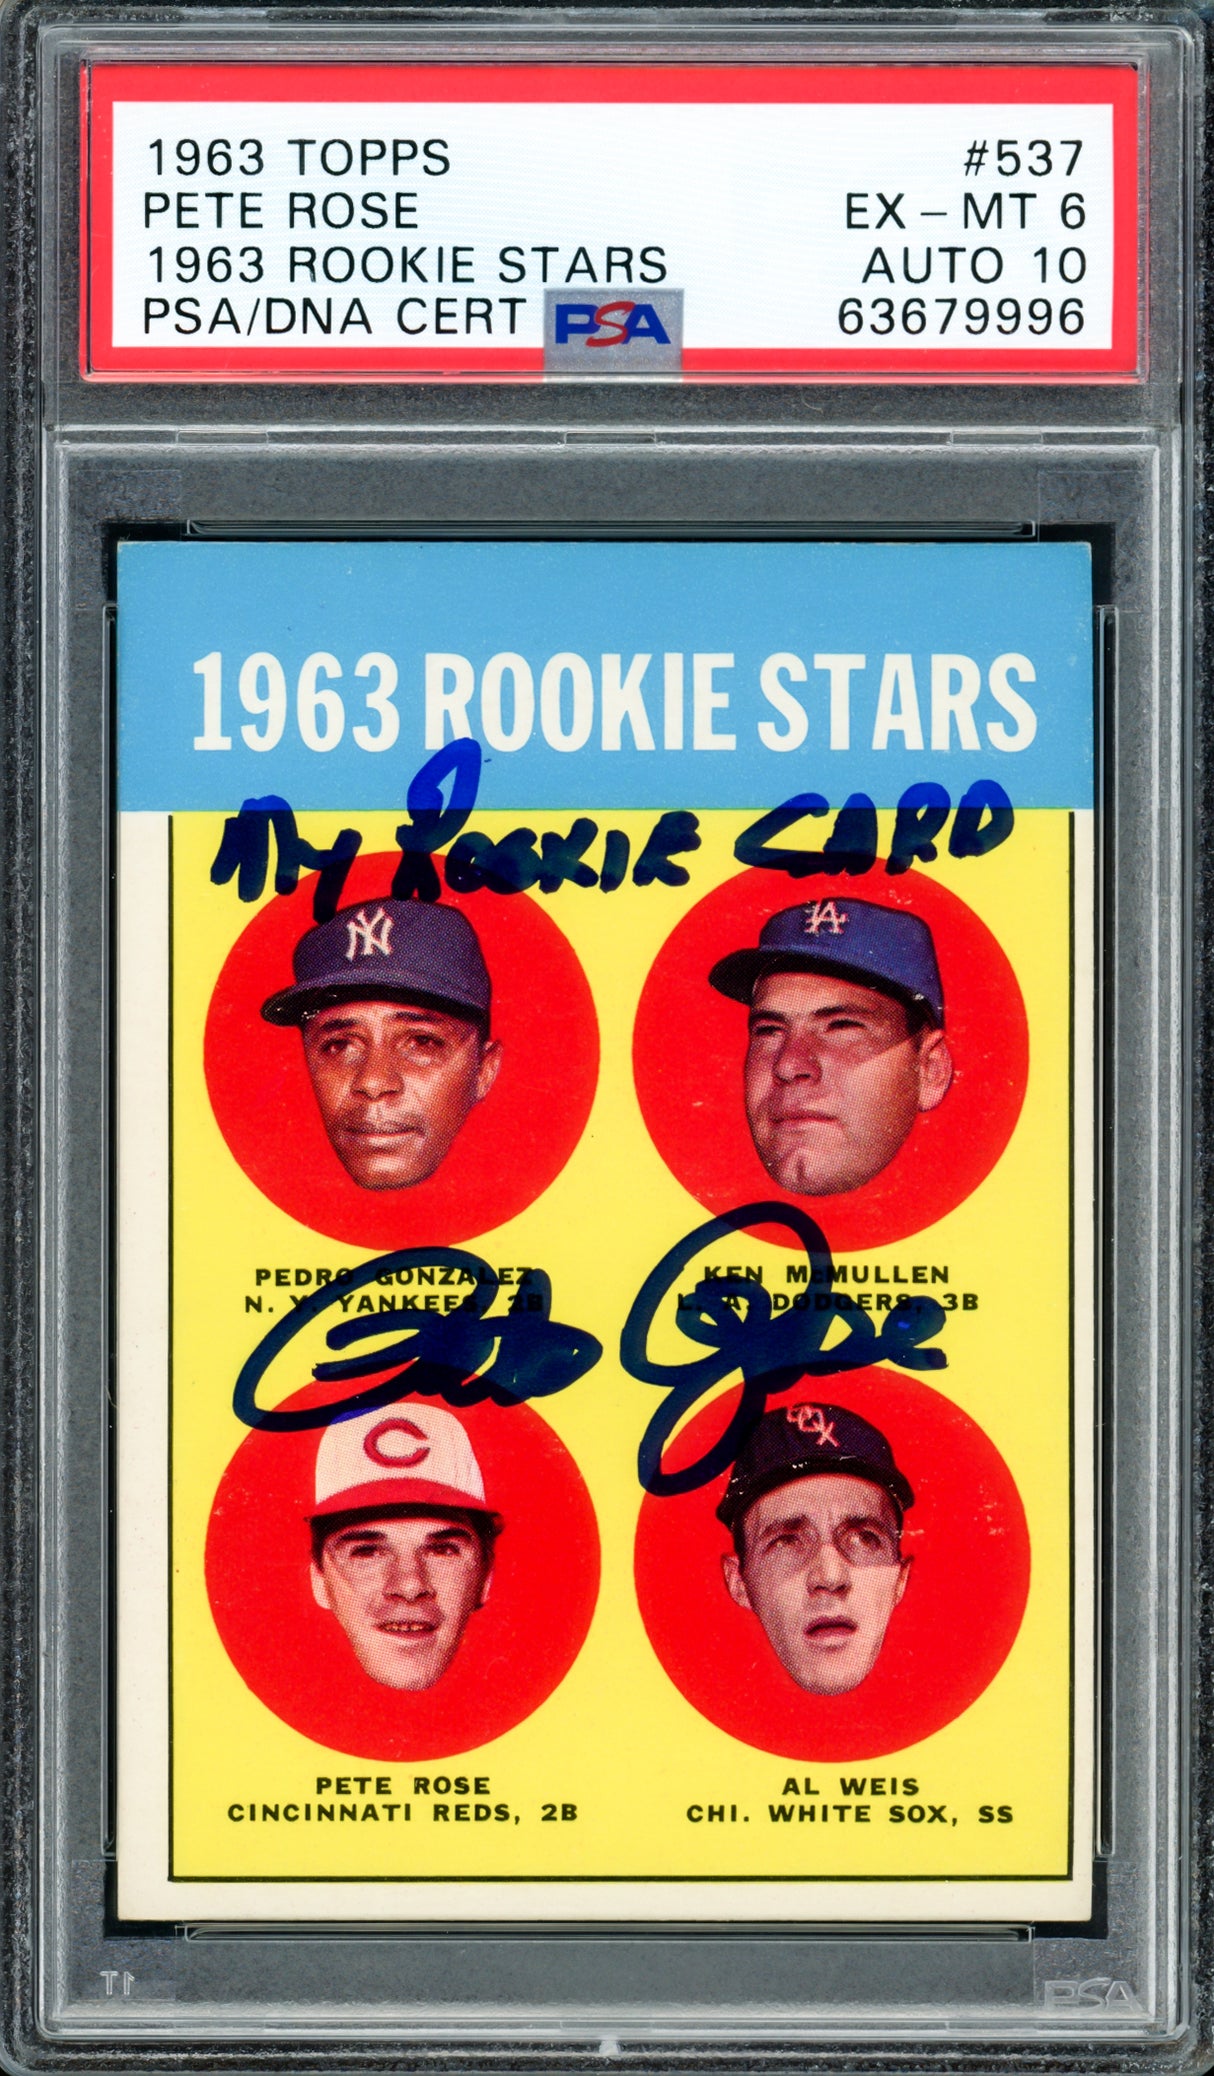 Pete Rose Autographed 1963 Topps Rookie Card #537 Cincinnati Reds PSA 6 Auto Grade Gem Mint 10 "My Rookie Card" PSA/DNA #63679996